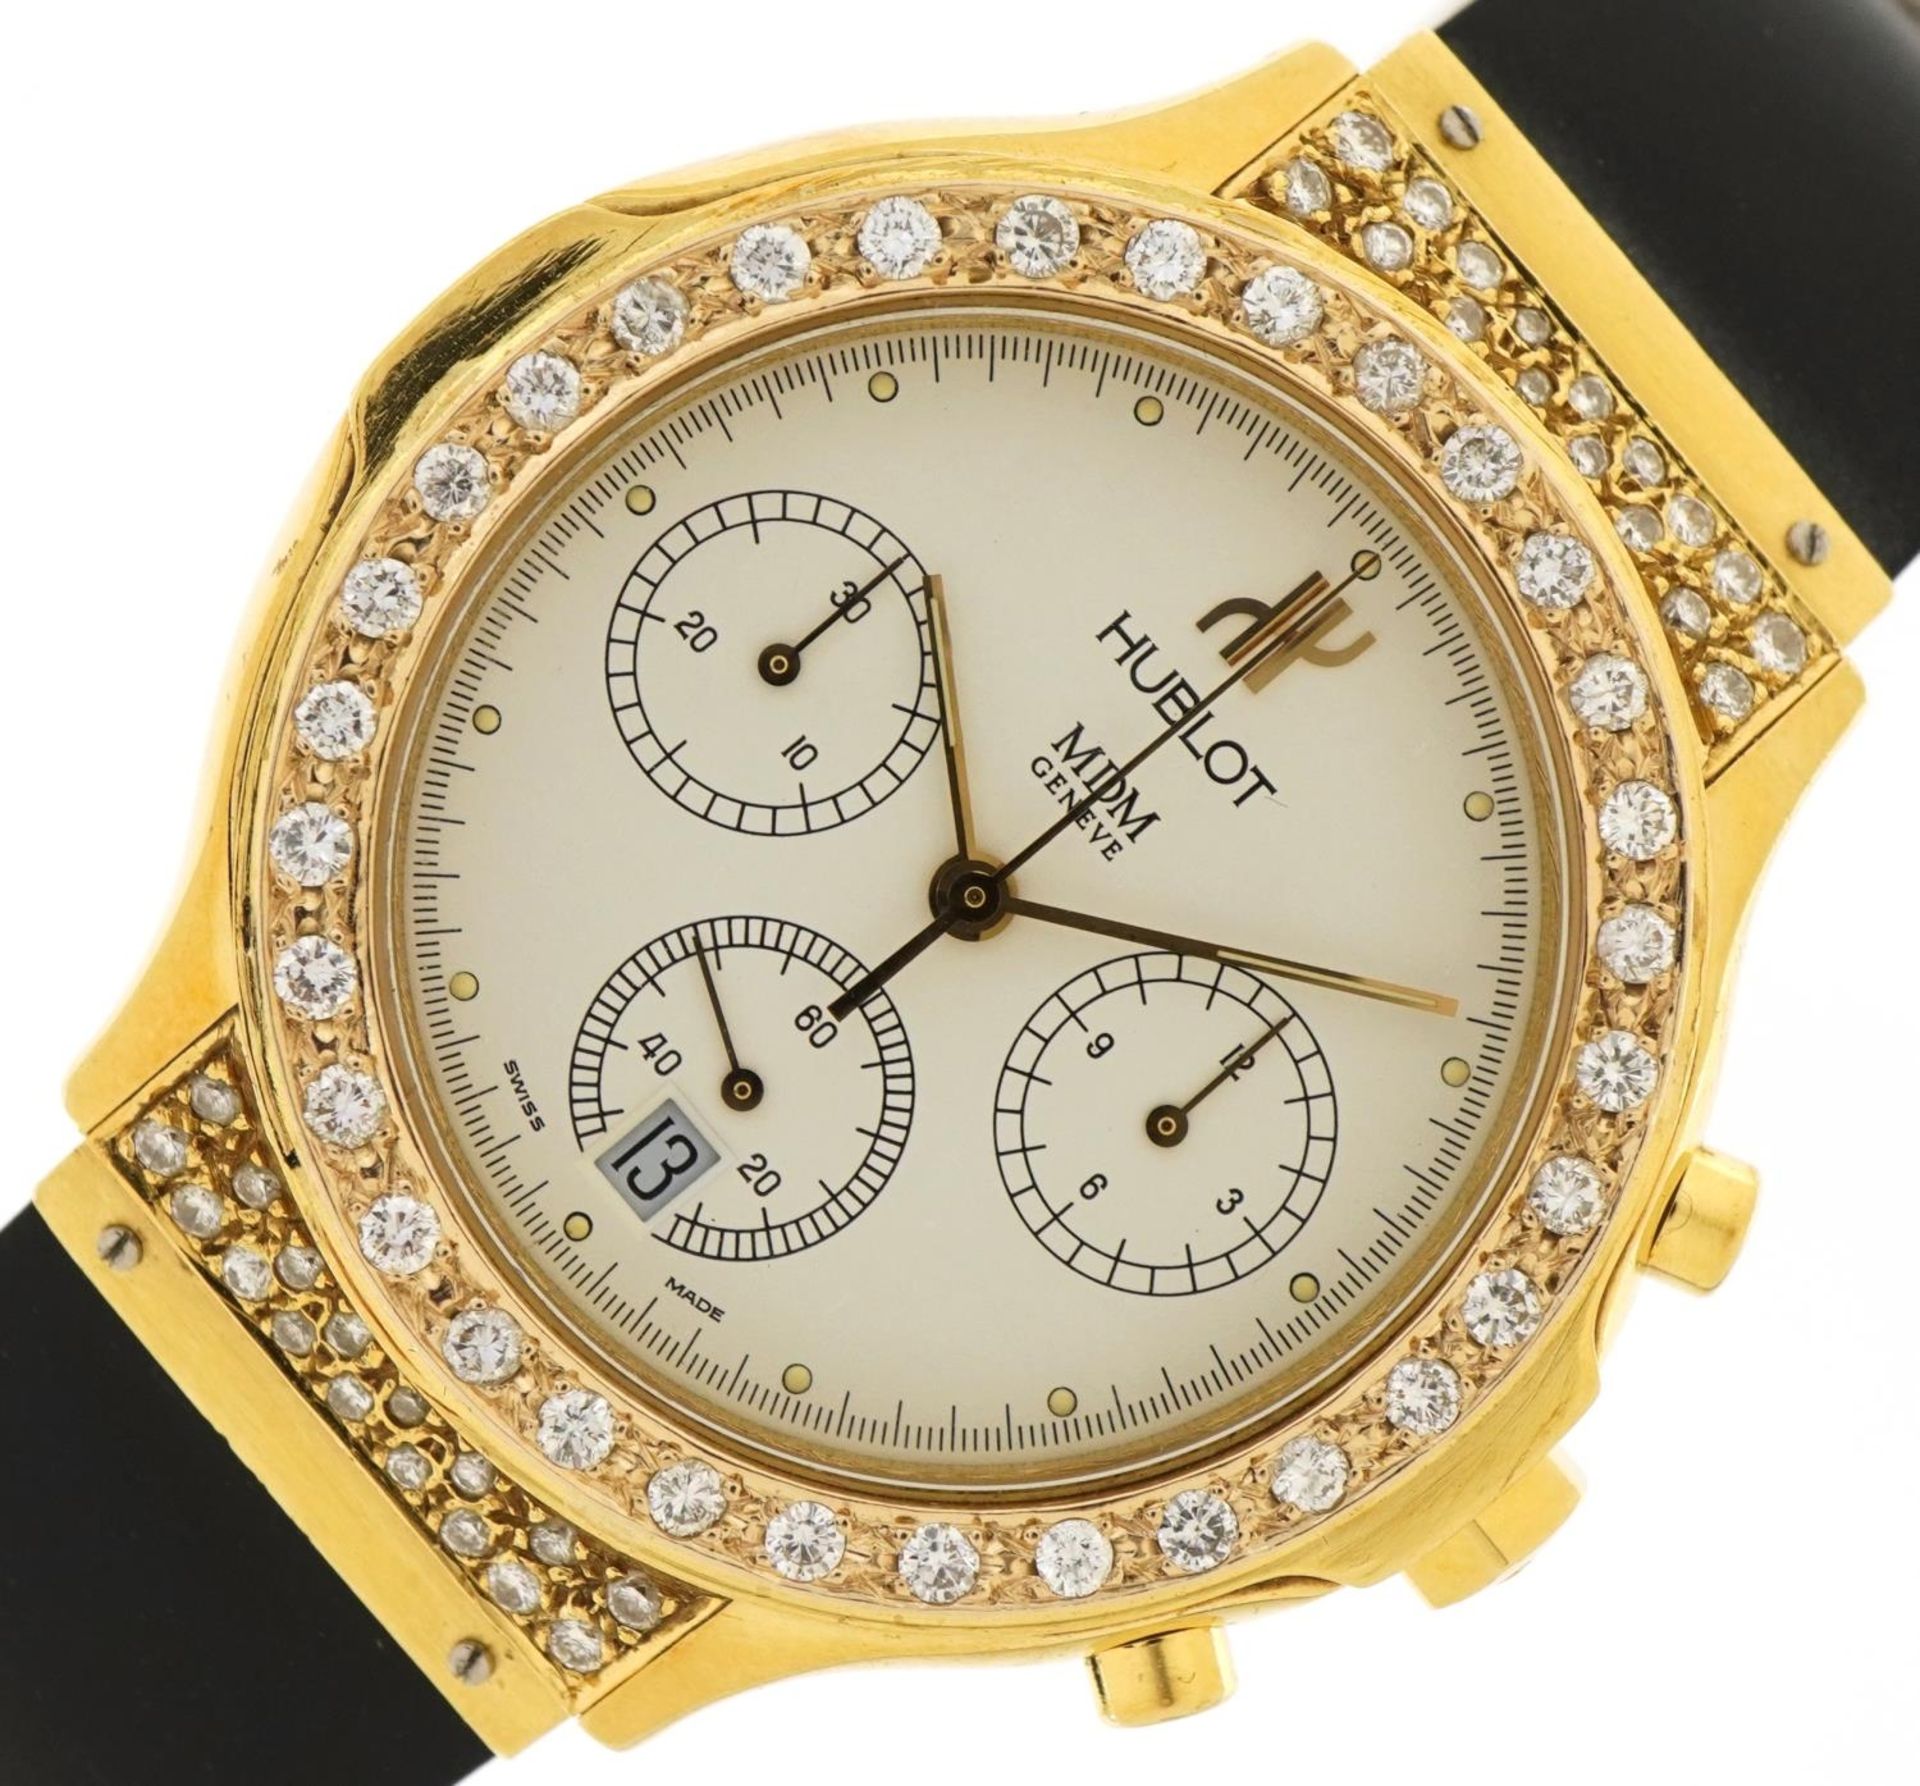 Hublot, 18ct gold and diamond Hublot MDM 1621.3 wristwatch, reference 251132, with black rubber